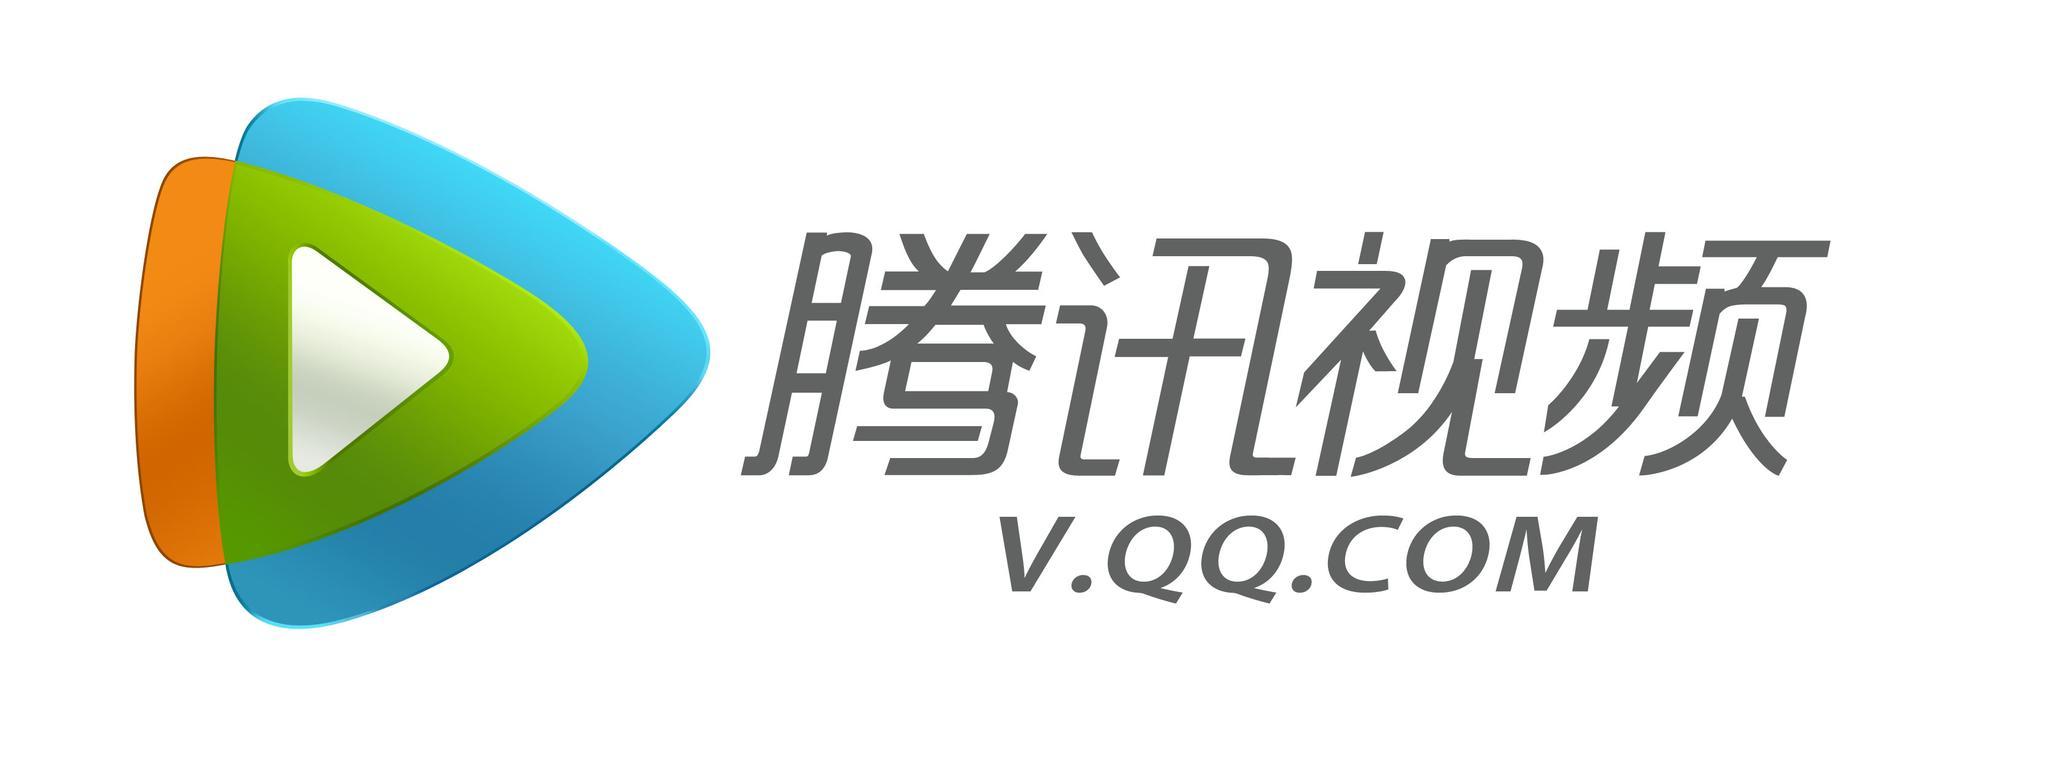 Qq.com Logo - Advertise in China. Digital Consulting. Digital Advertising